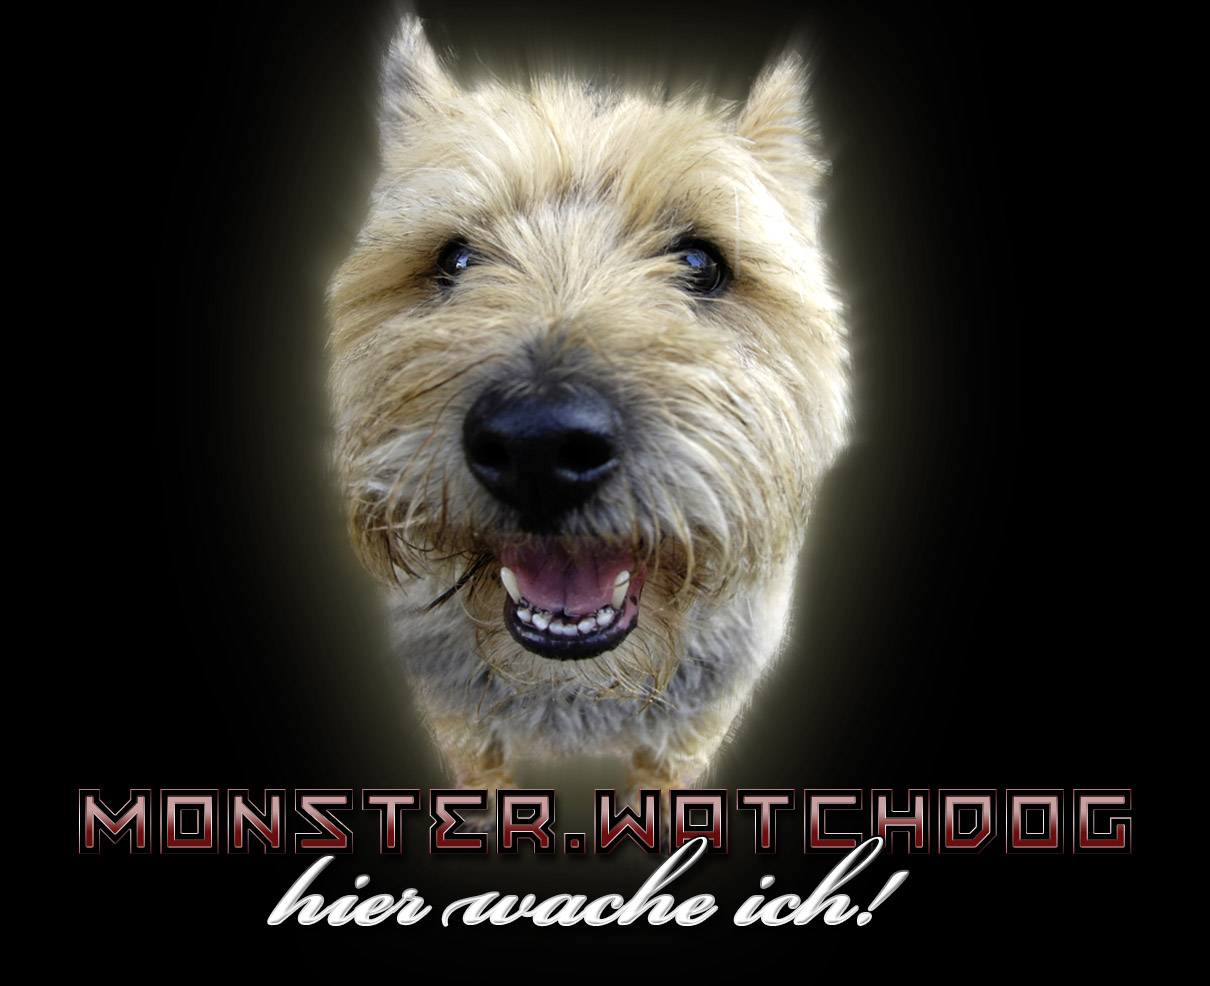 monster.watchdog - original photo & edit by pixel.piet